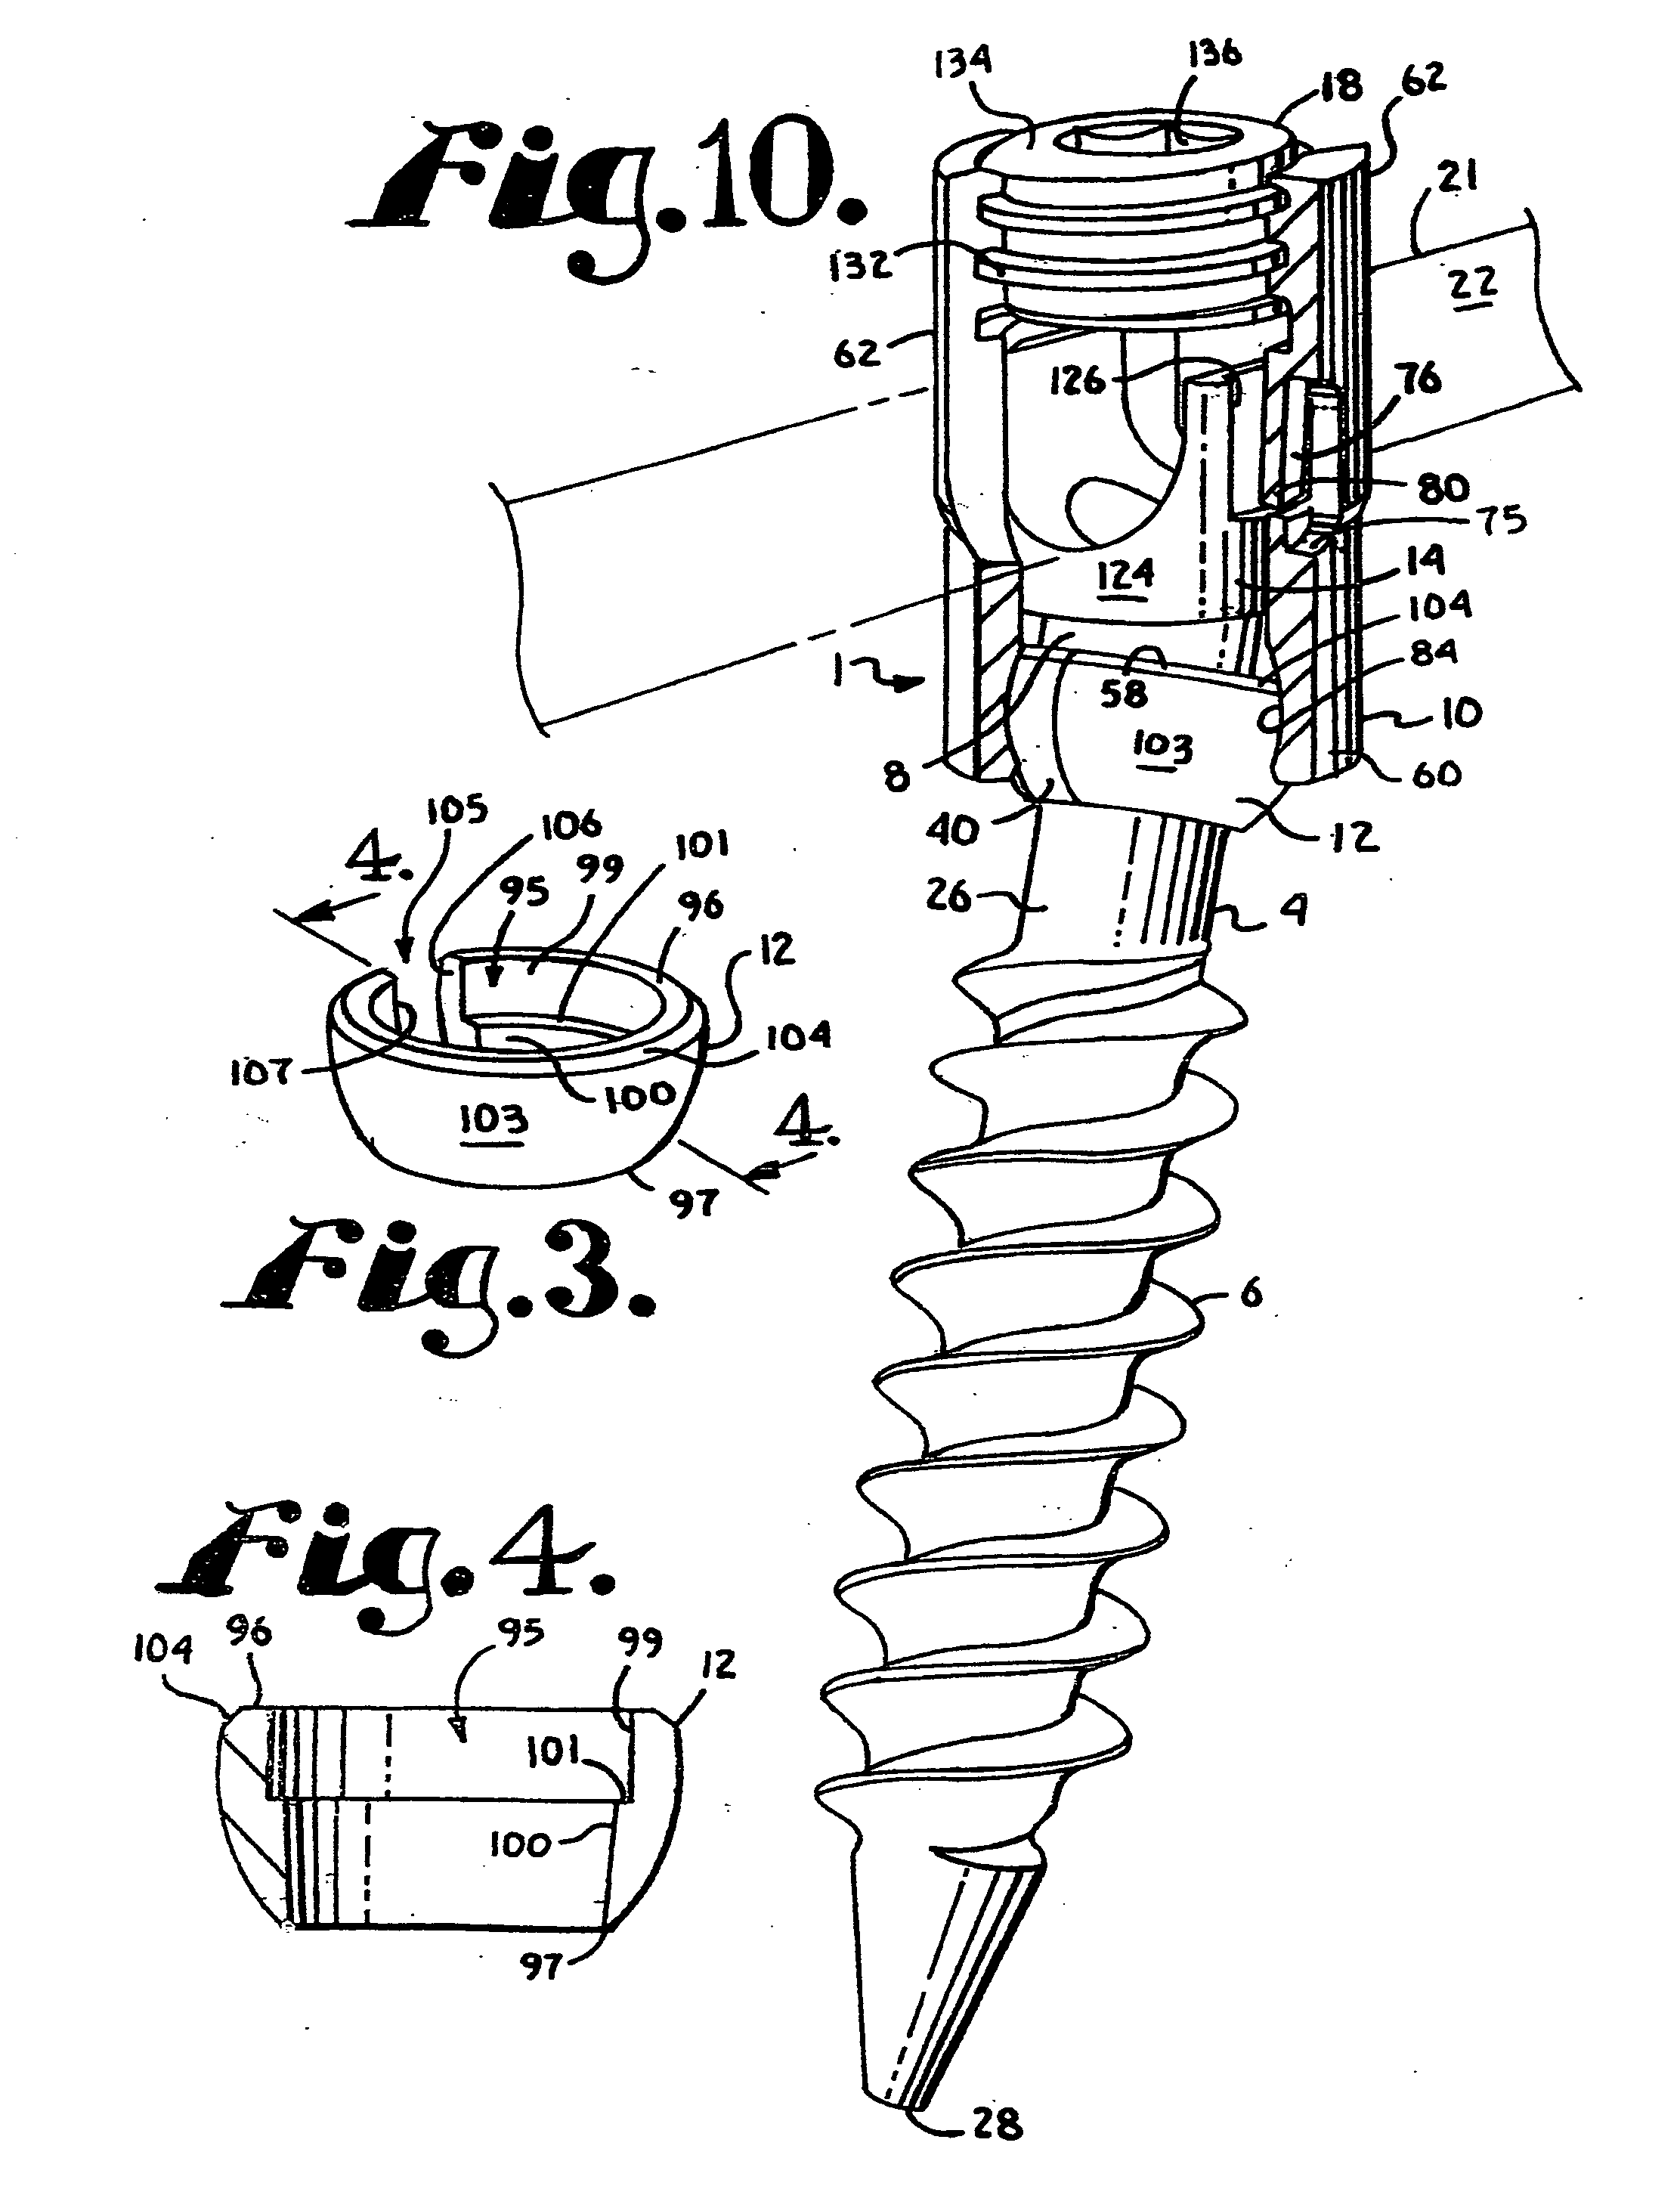 Polyaxial bone screw with shank-retainer insert capture